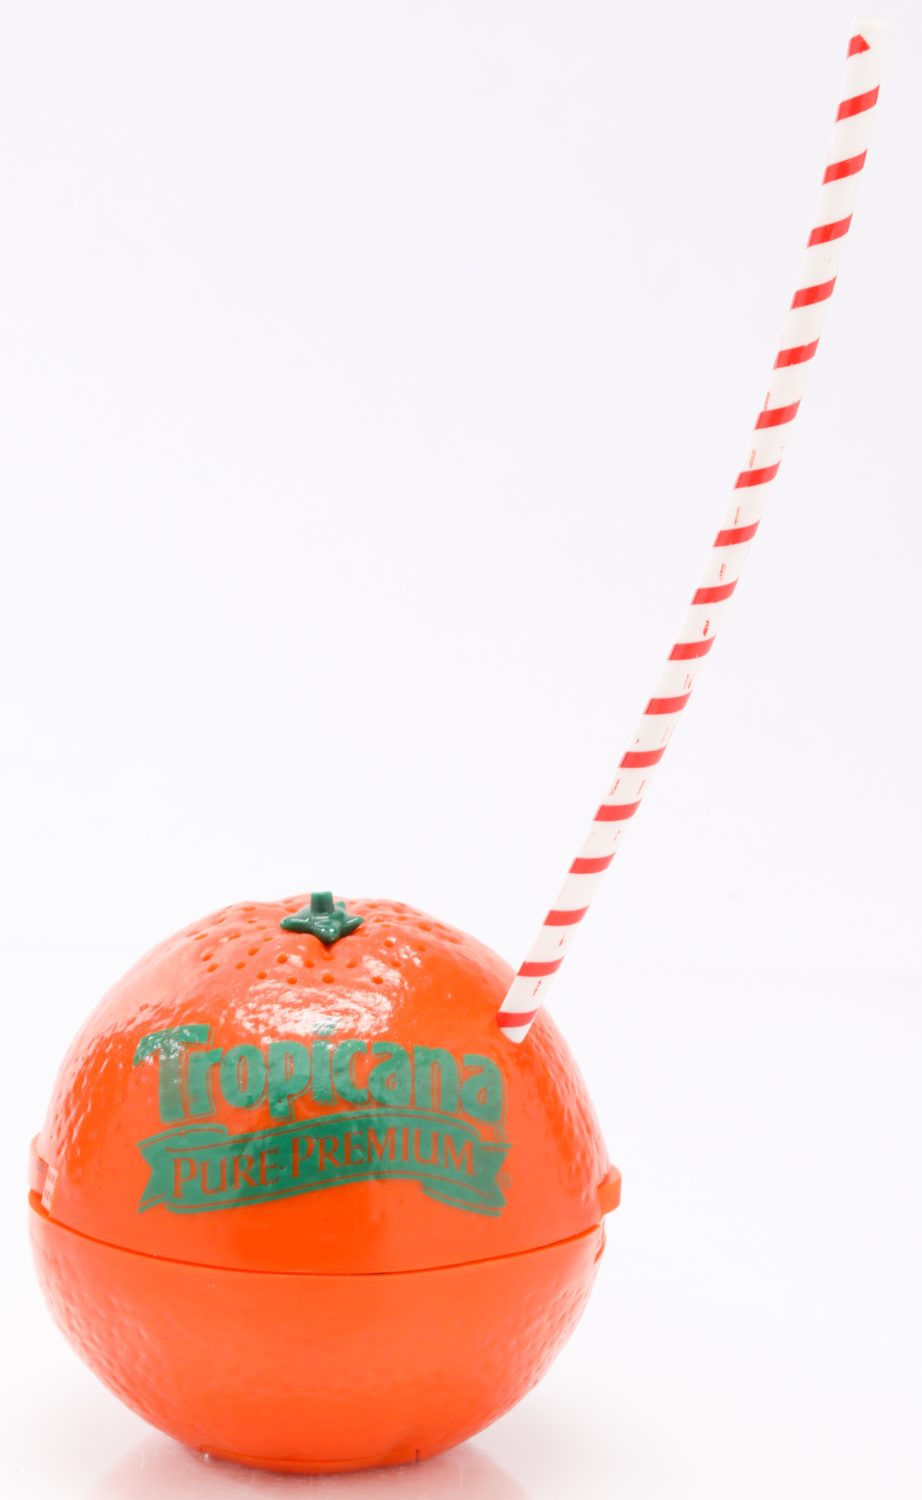 Tropicana Orange-Shaped Promotional Radio